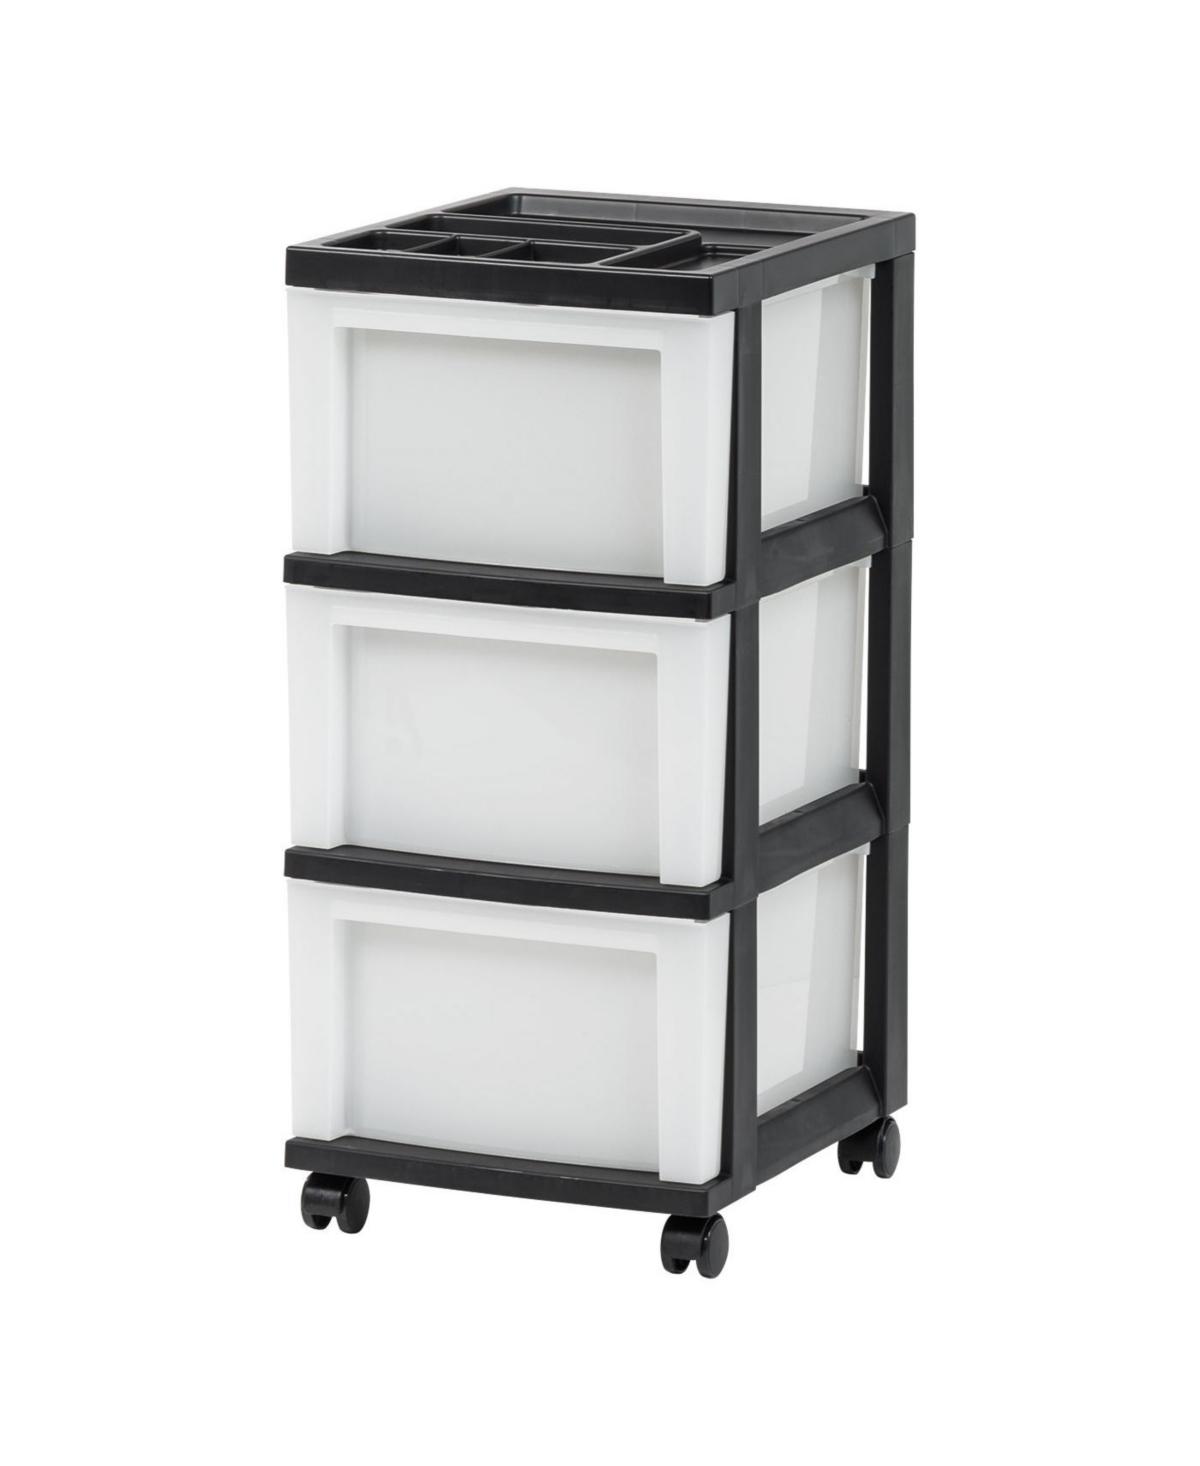 3 Drawer Rolling Storage Cart with Organizer Top, Black - Black